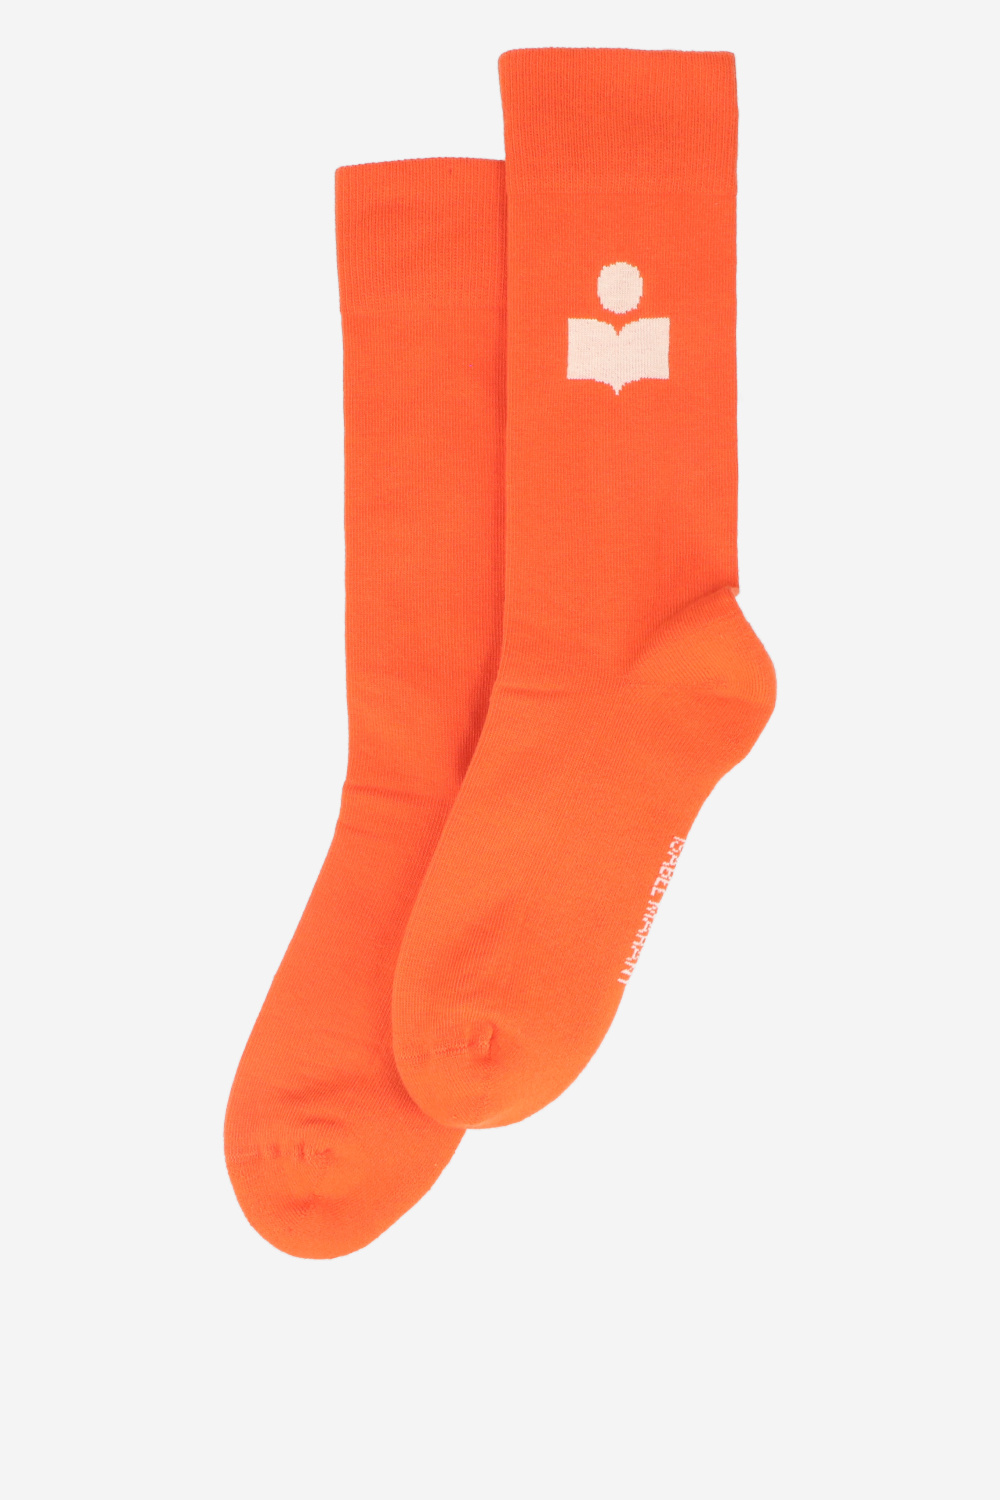 Isabel Marant Socks Orange